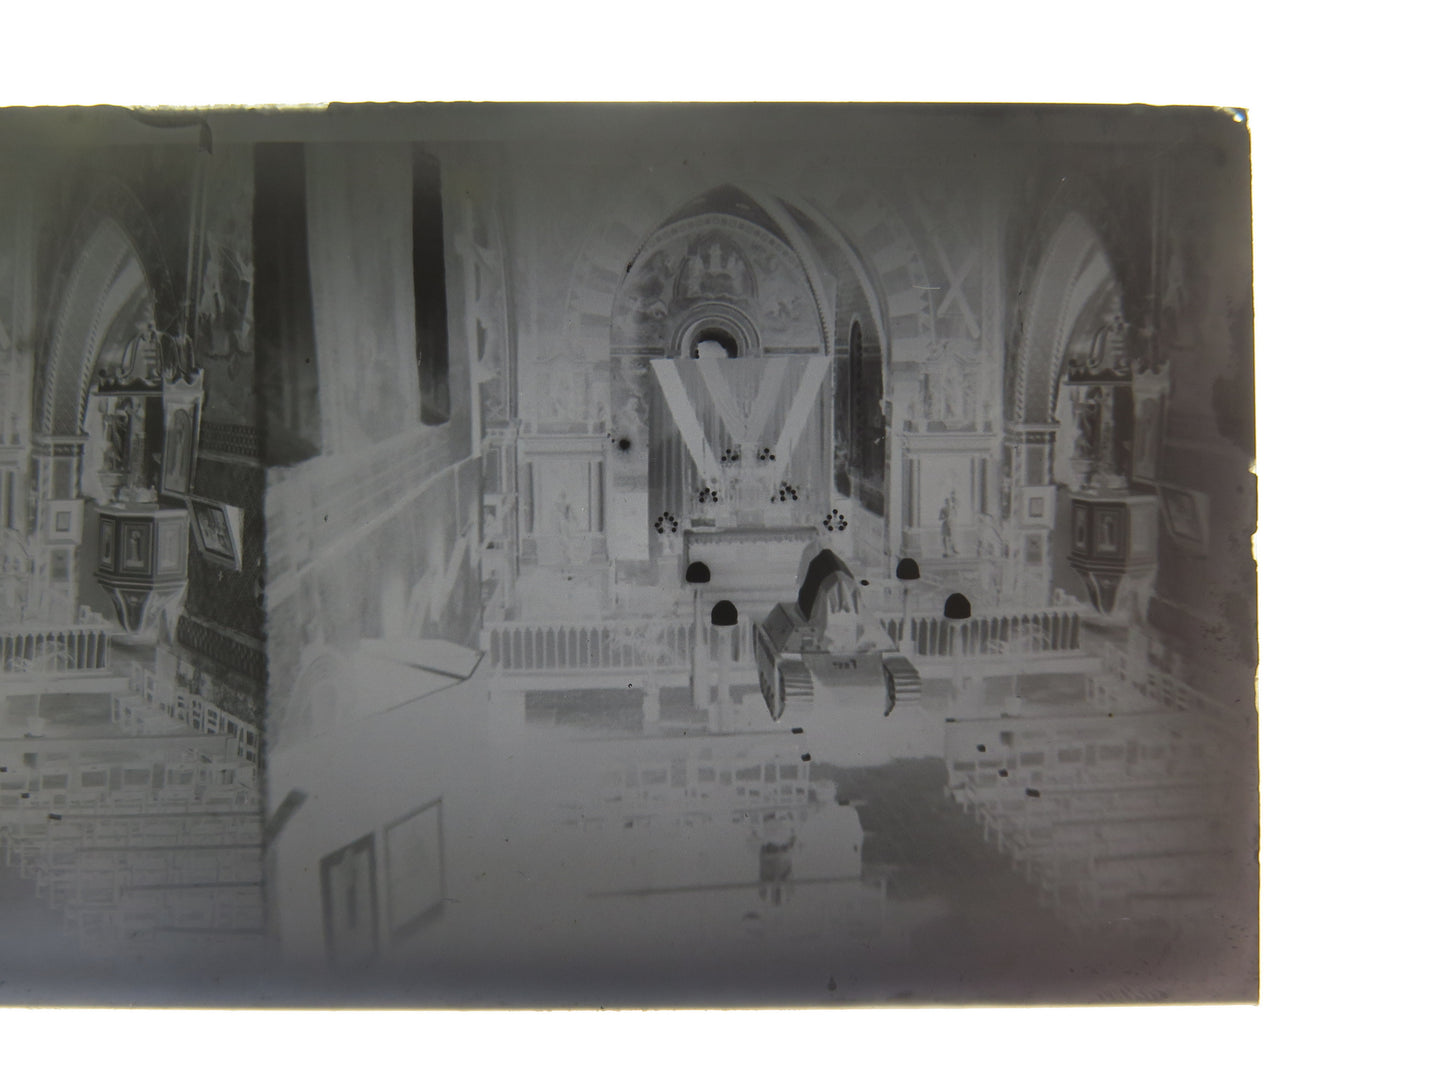 LARGE COLLECTION OF ANTIQUE PHOTOGRAPHIC NEGATIVES 550 PIECES FRANCE 1930s BM56